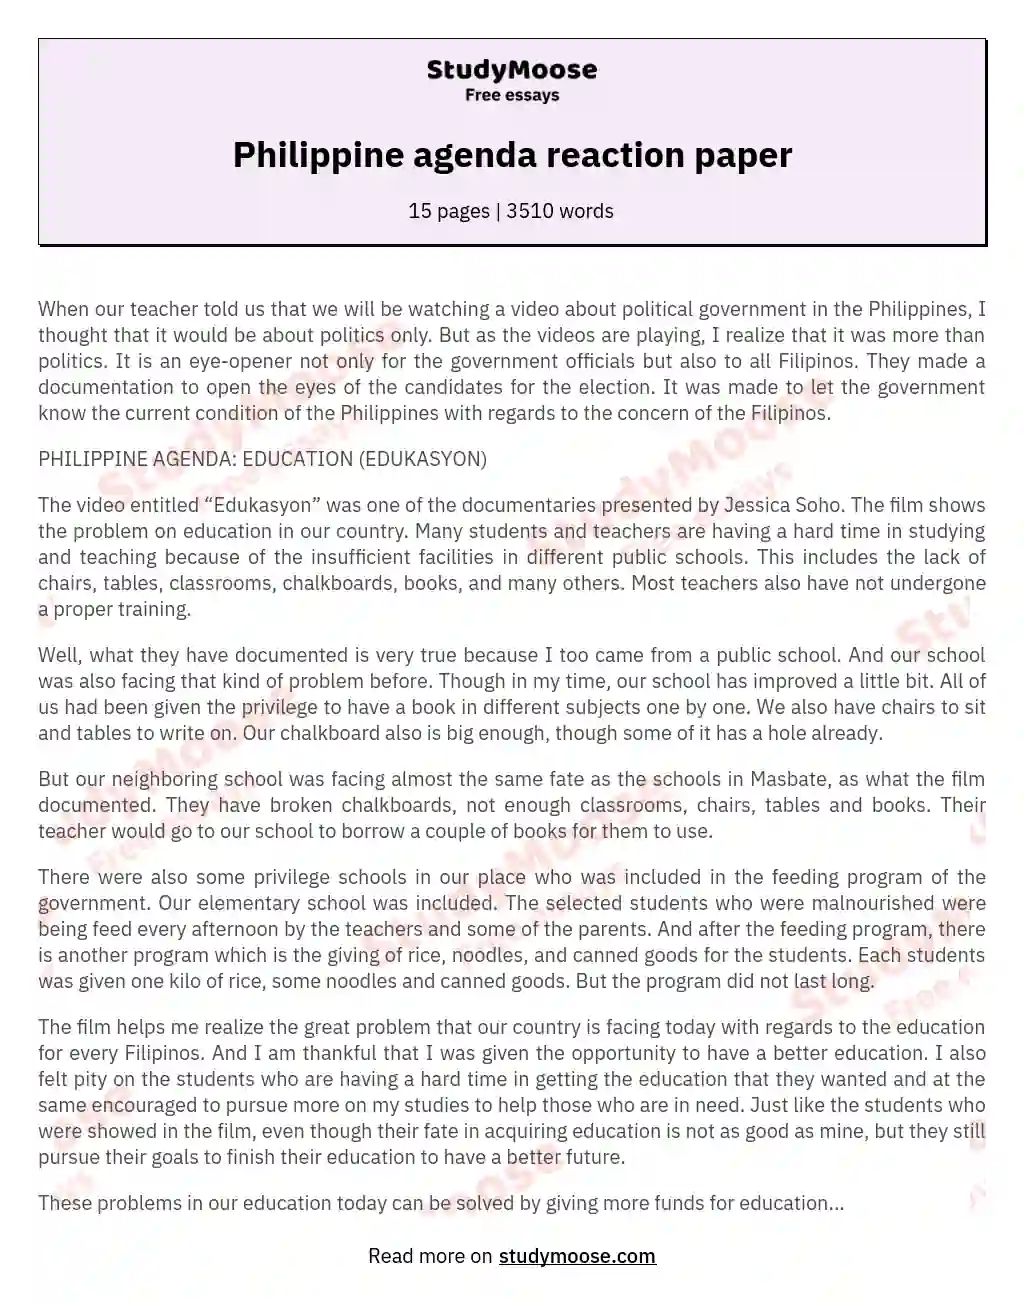 Philippine agenda reaction paper essay